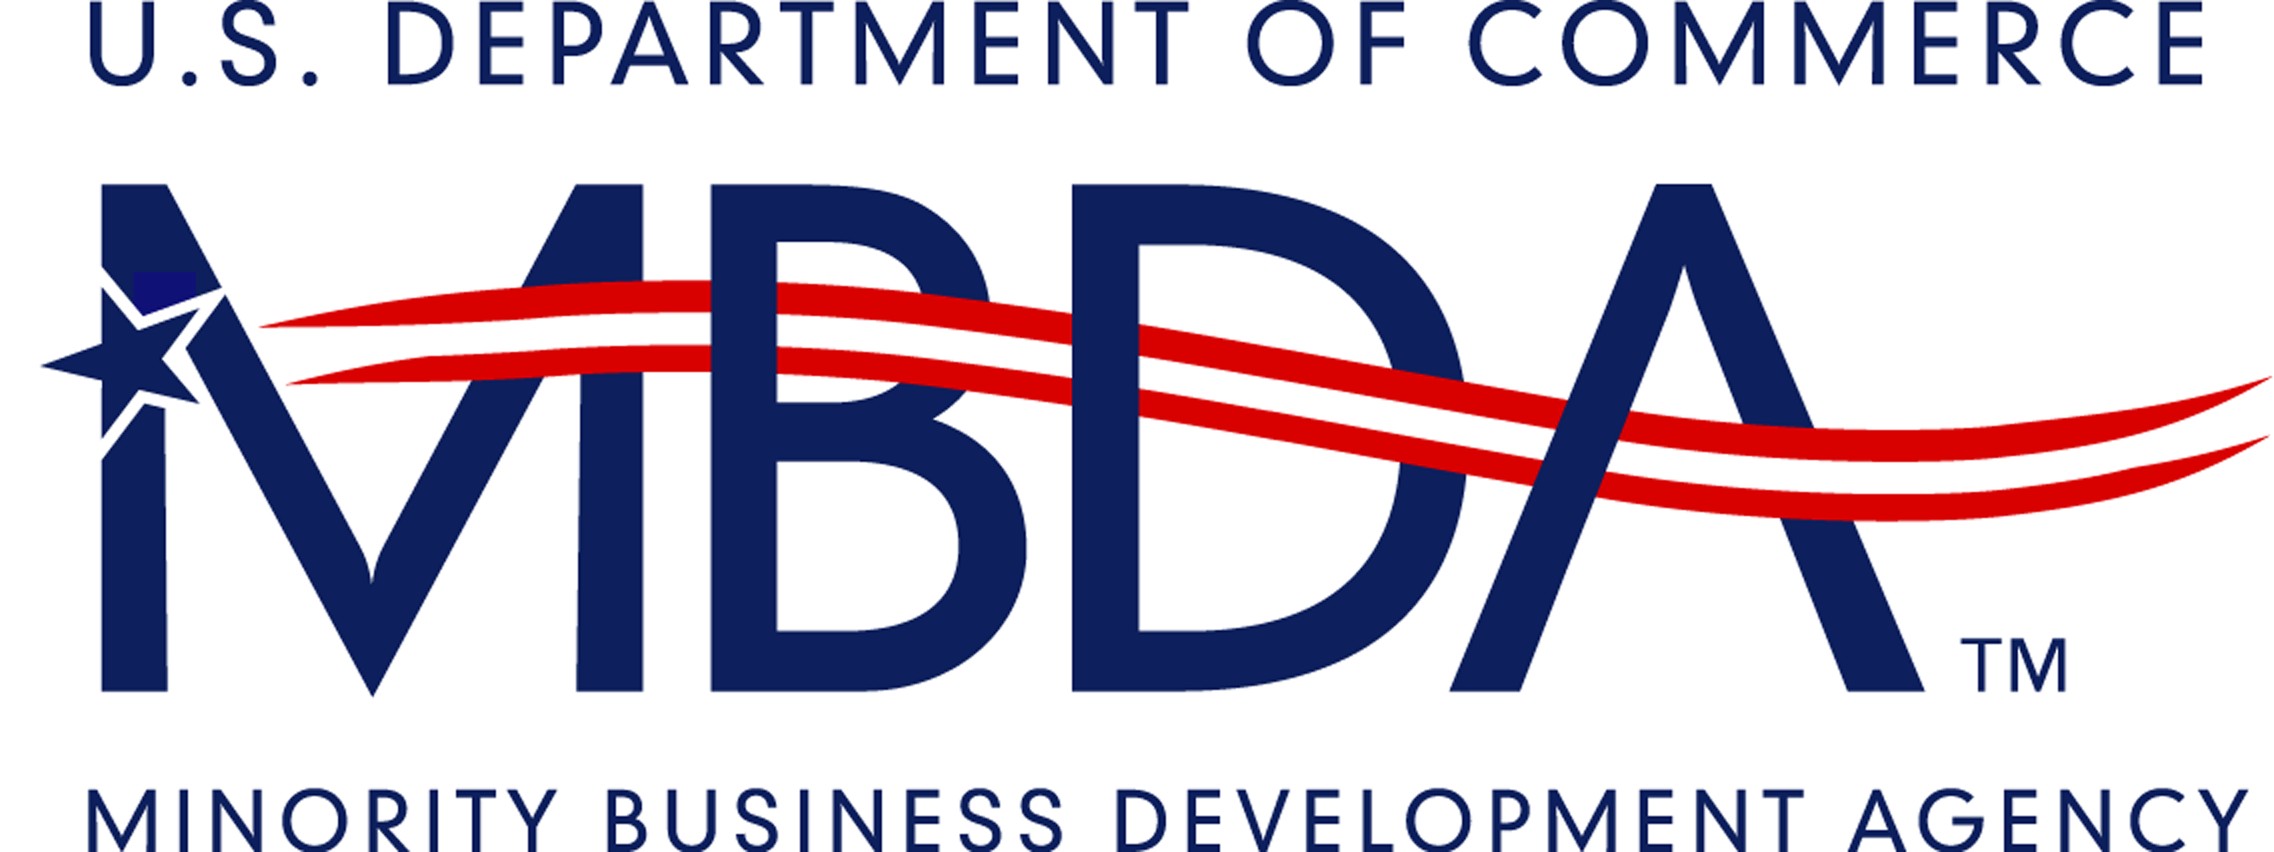 U.S. Department of Commerce Minority Business Development Logo